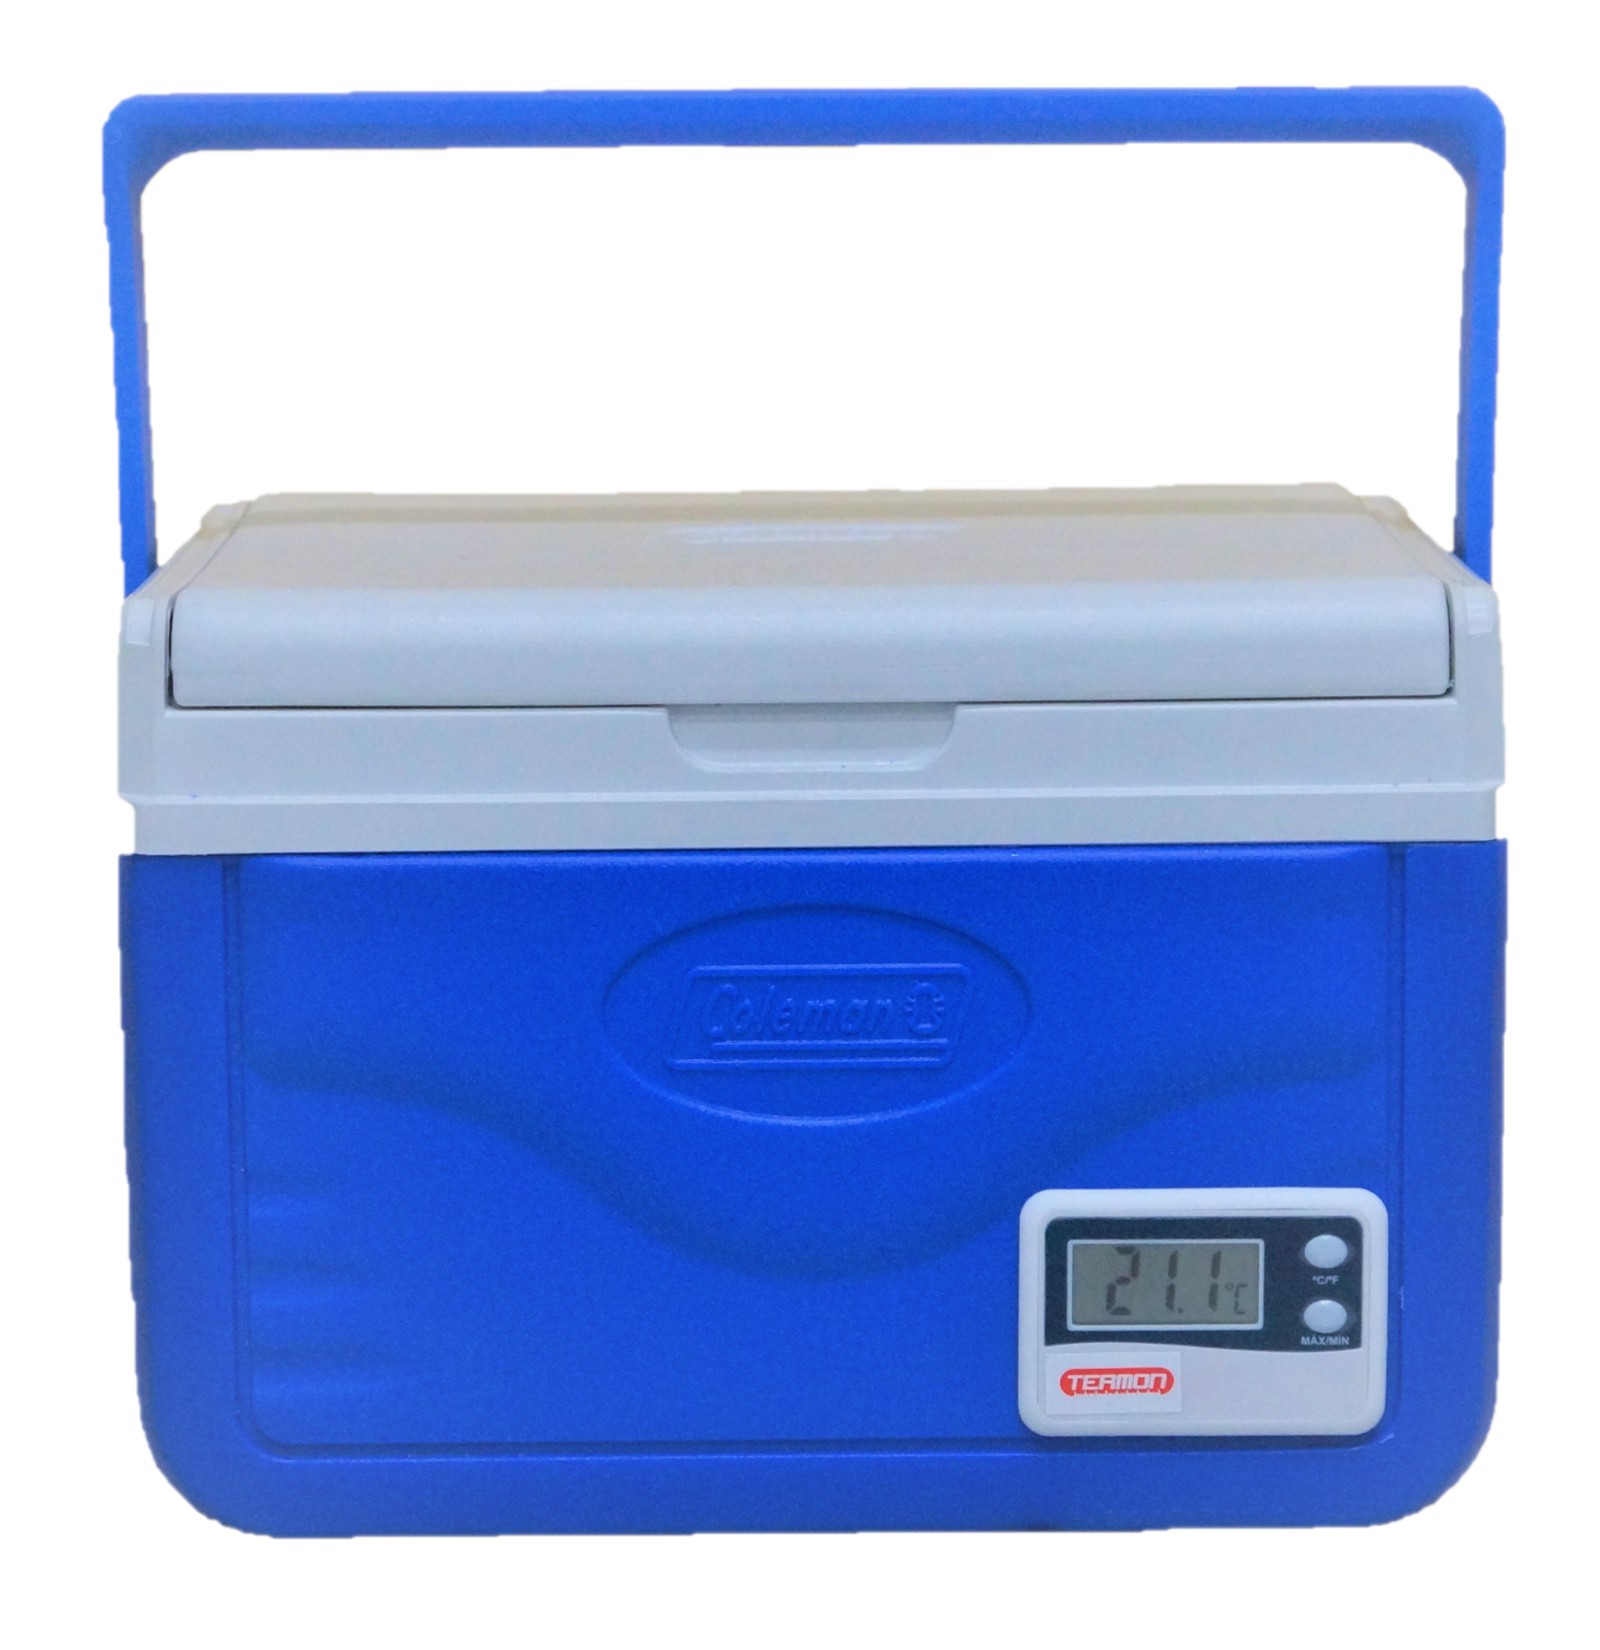 Caixa Térmica 5 litros com Termômetro Digital Vacina - lojatermon